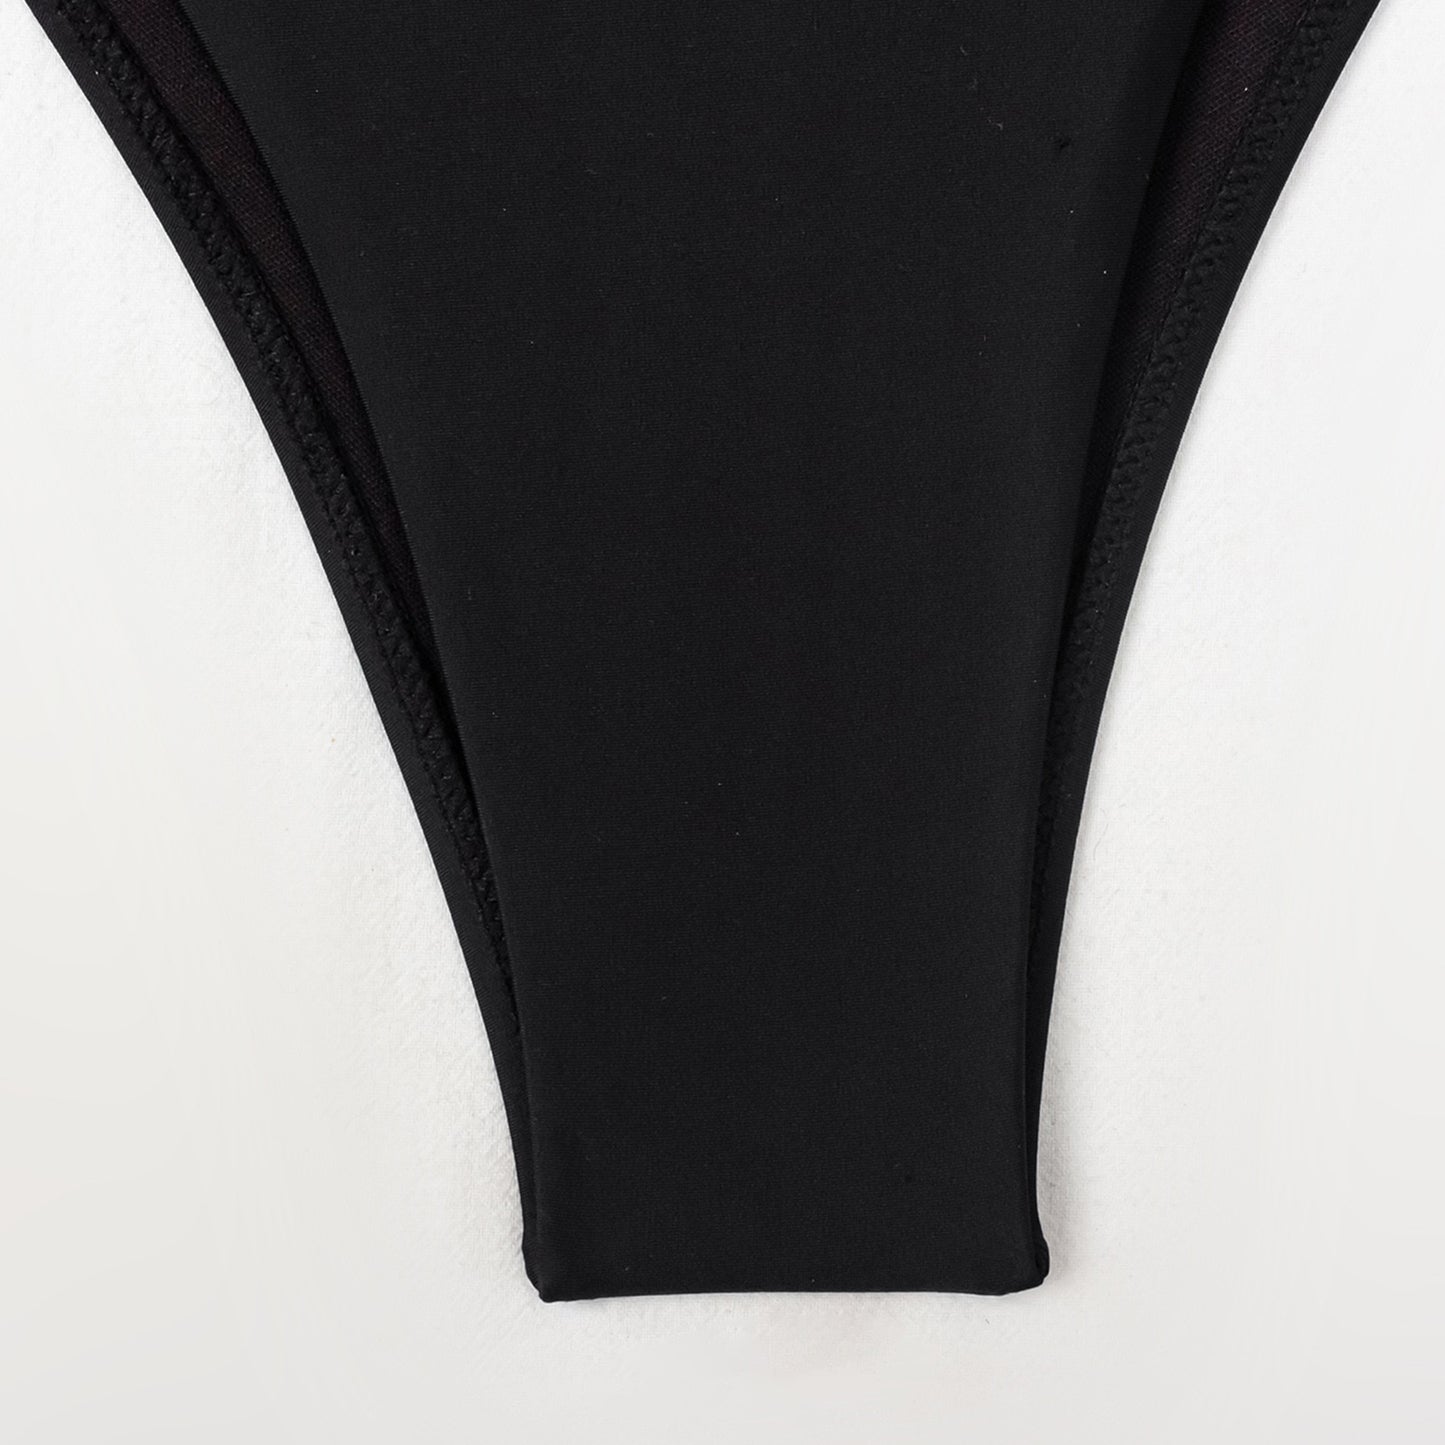 Hollow One-piece Swimsuit Cross Bandage Bikini